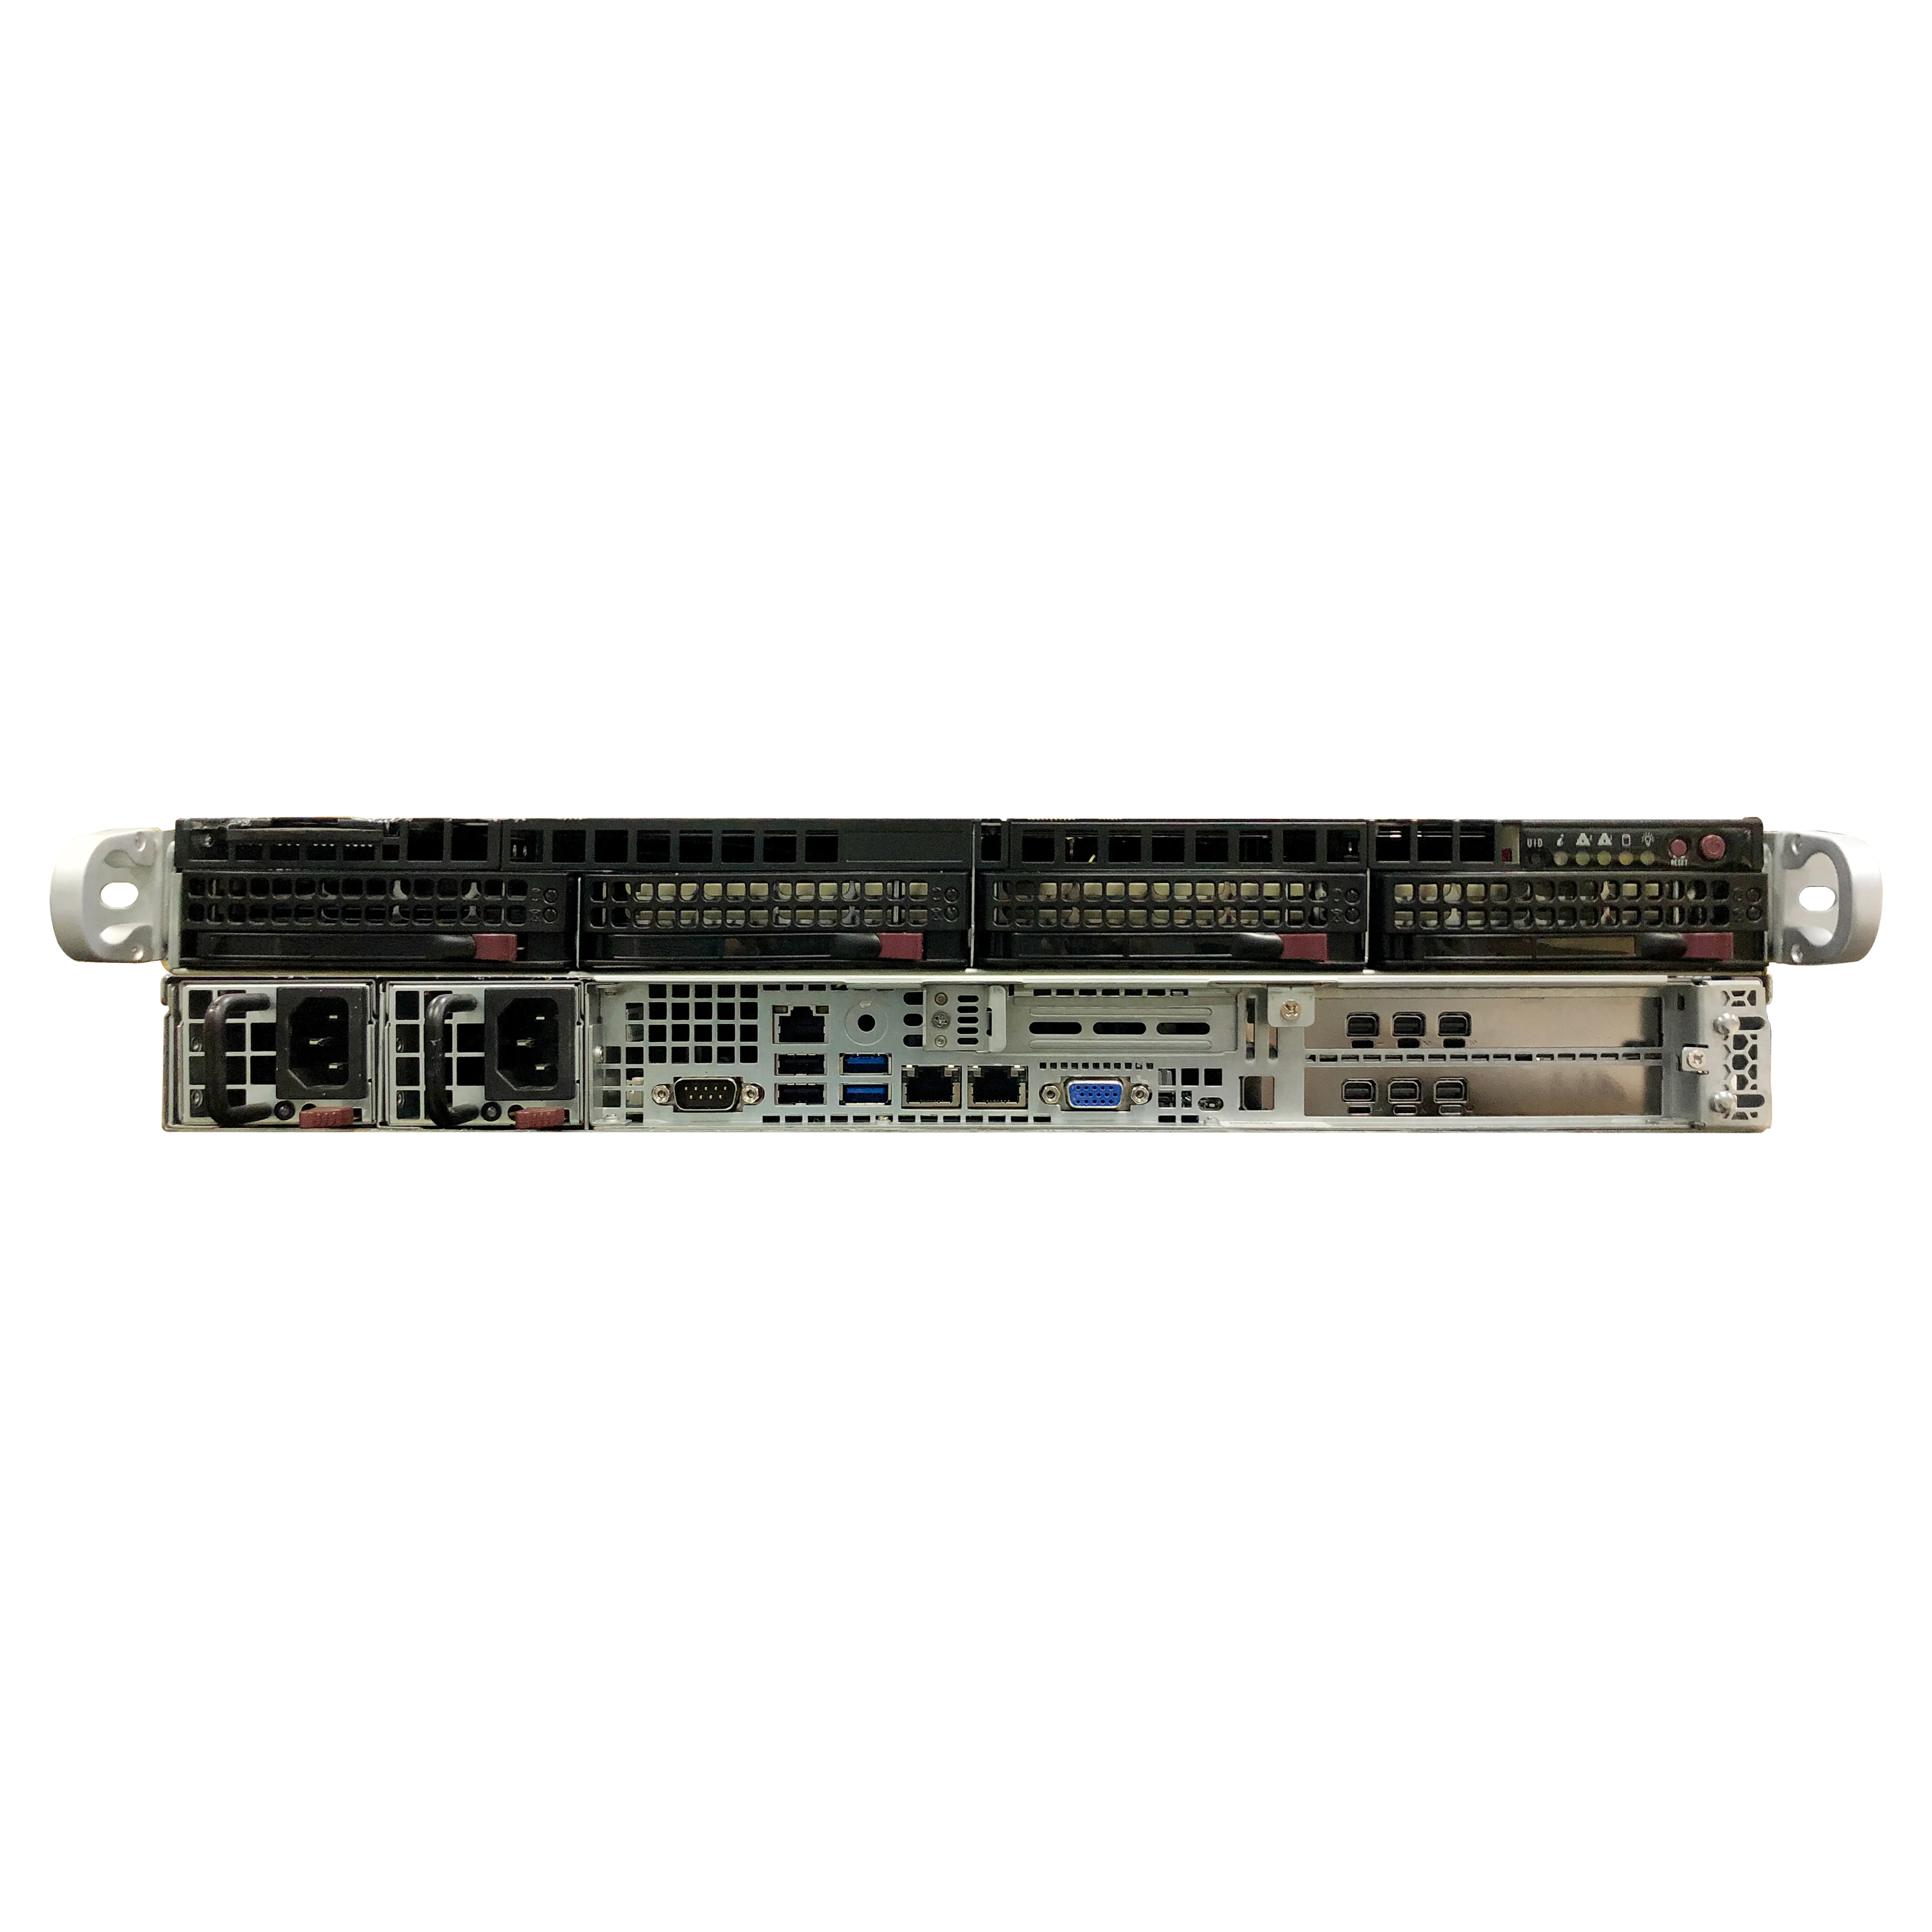 Yuk9000 Netwerk Broadcast Level Sdi H264 H265 Hevc Video Encoder Multi-Channel Encoder Transcoder Servers